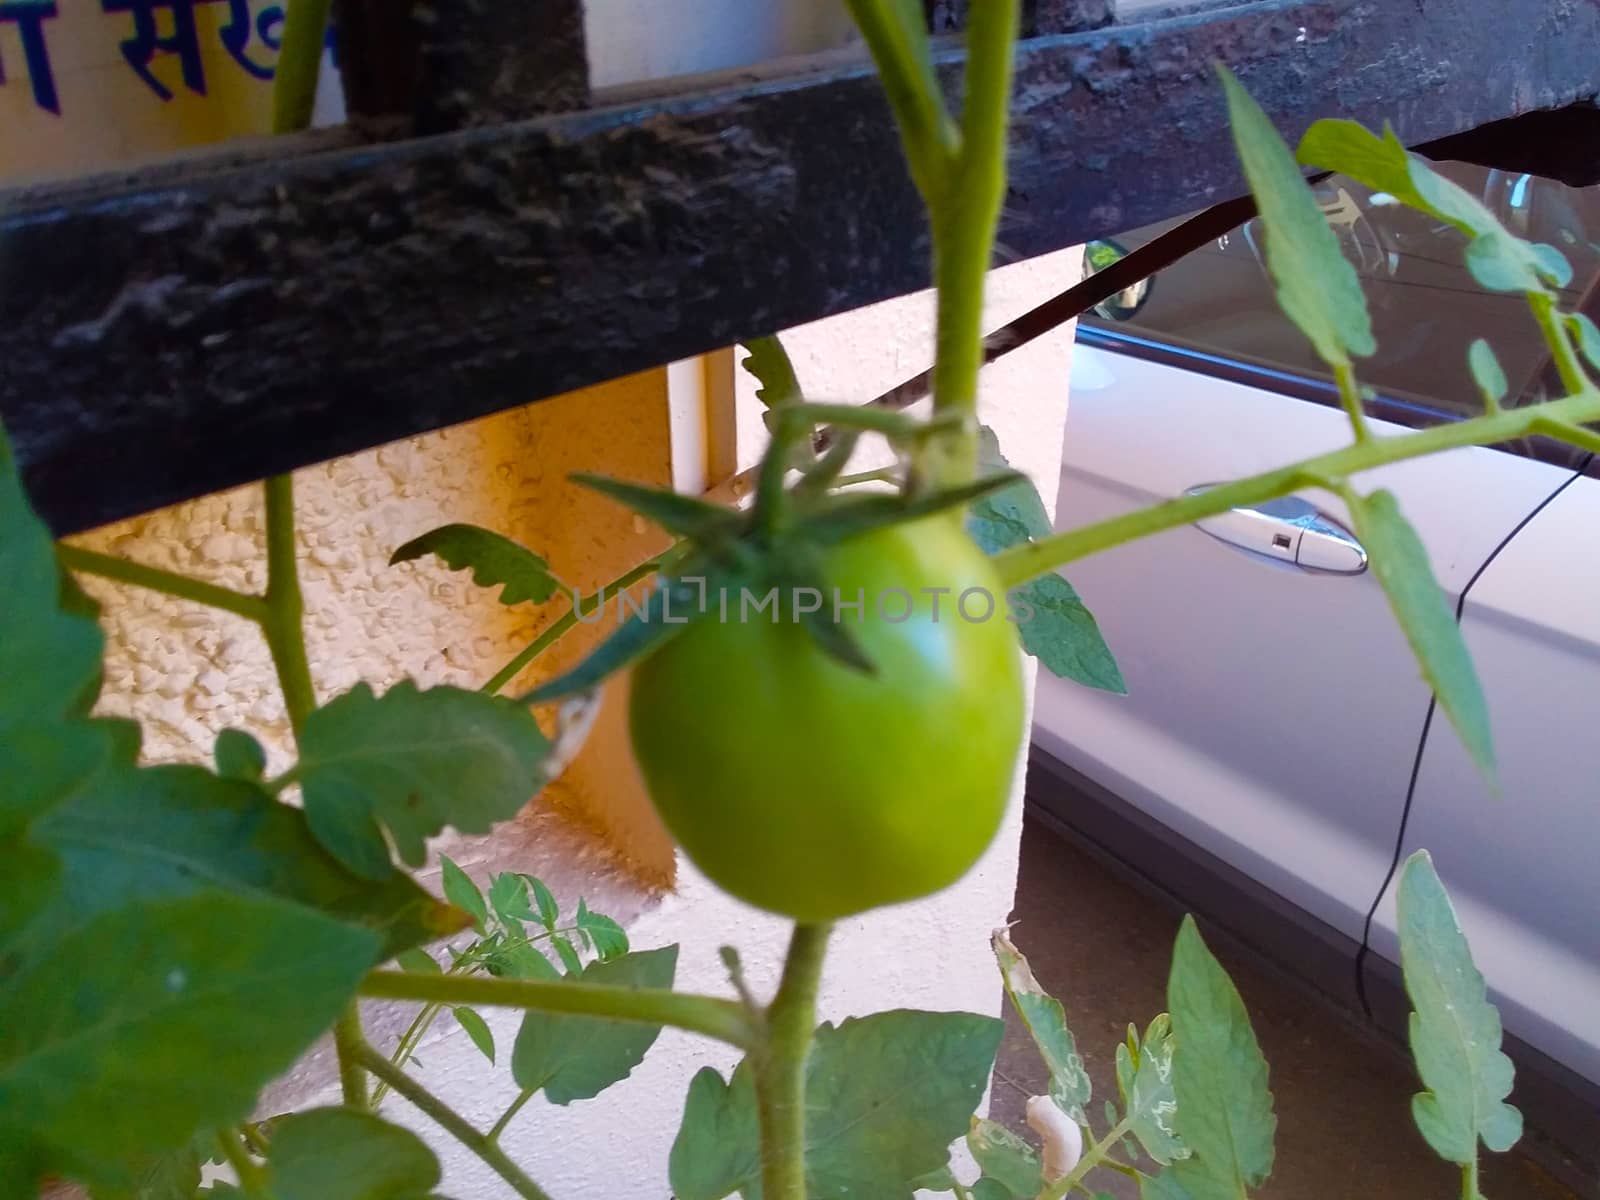 a green tomato in my garden